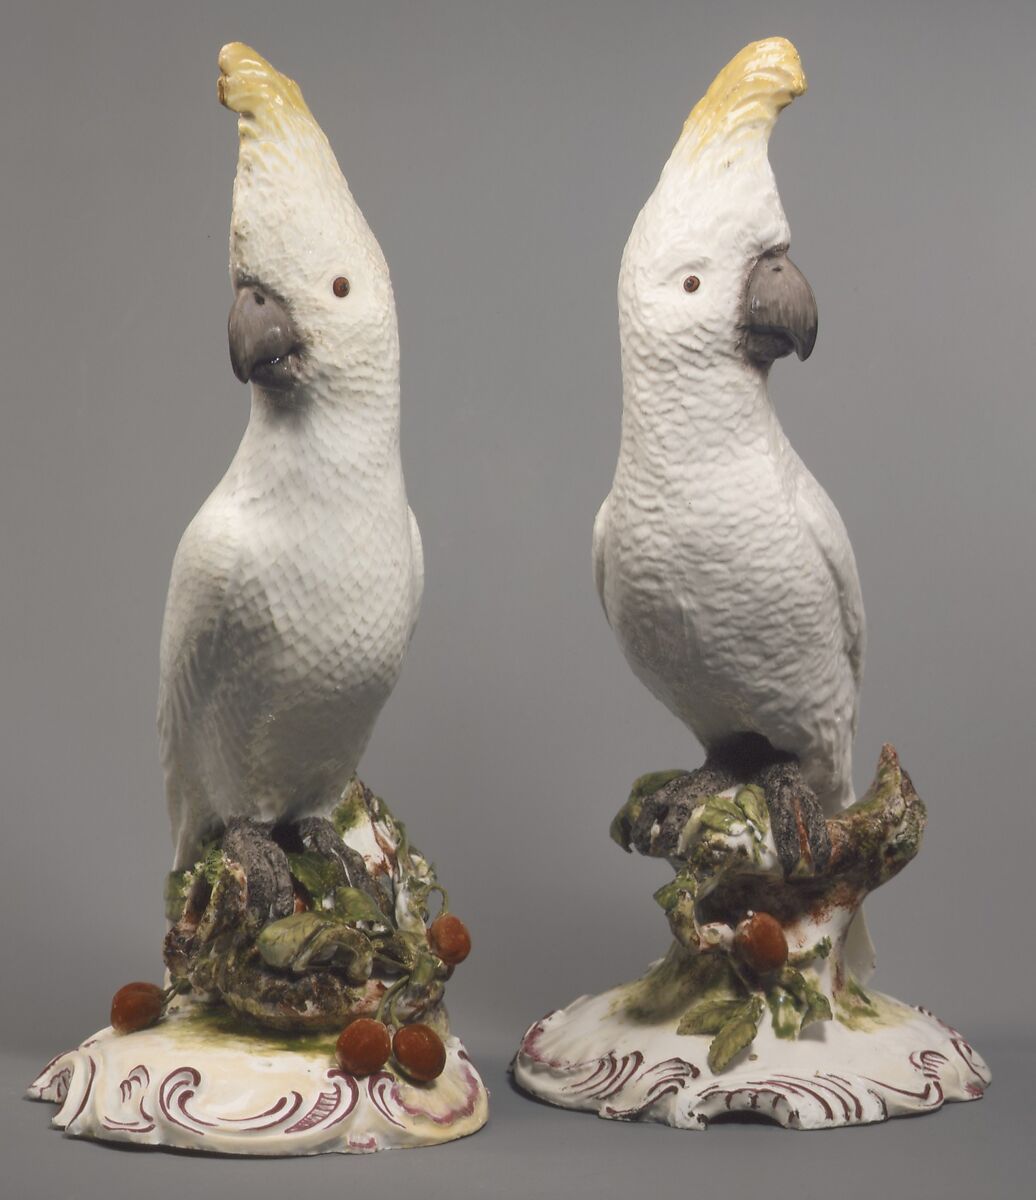 Cockatoo (one of a pair), Ludwigsburg Porcelain Manufactory (German, 1758–1824), Hard-paste porcelain, German, Ludwigsburg 